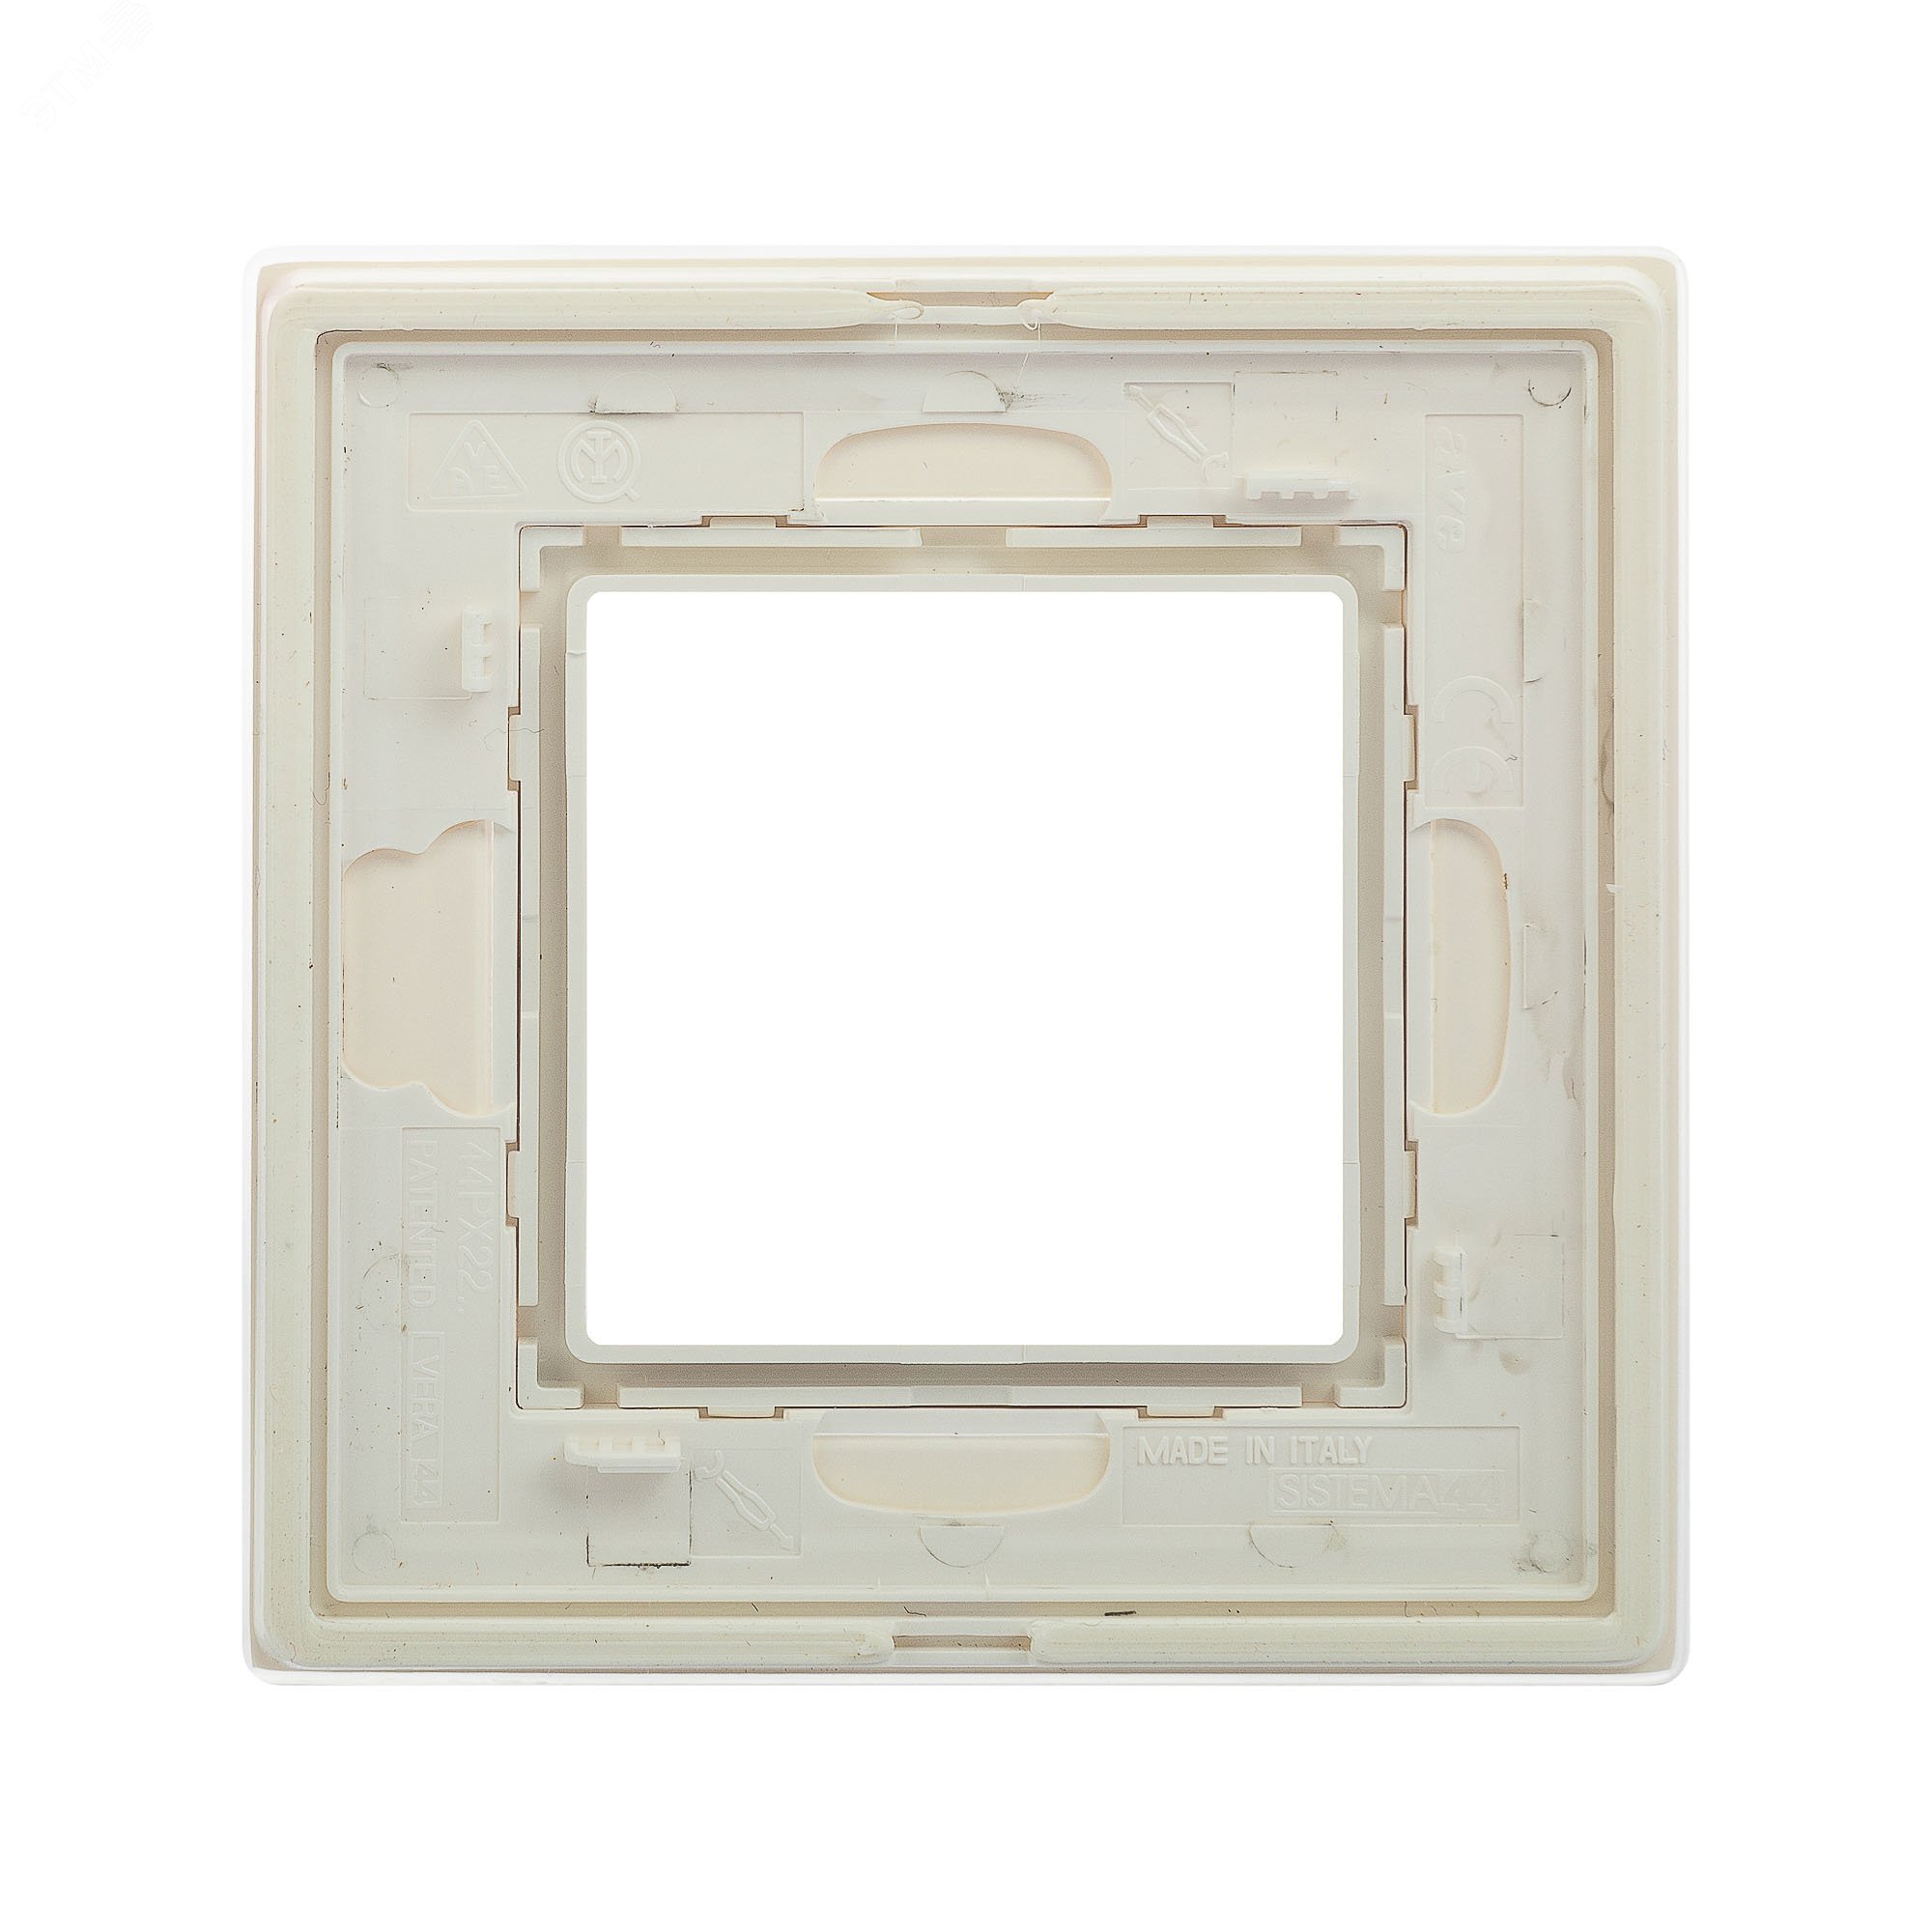 Рамка из натурального стекла,  ''Avanti'', белая, 2 модуля 4400822 DKC - превью 4